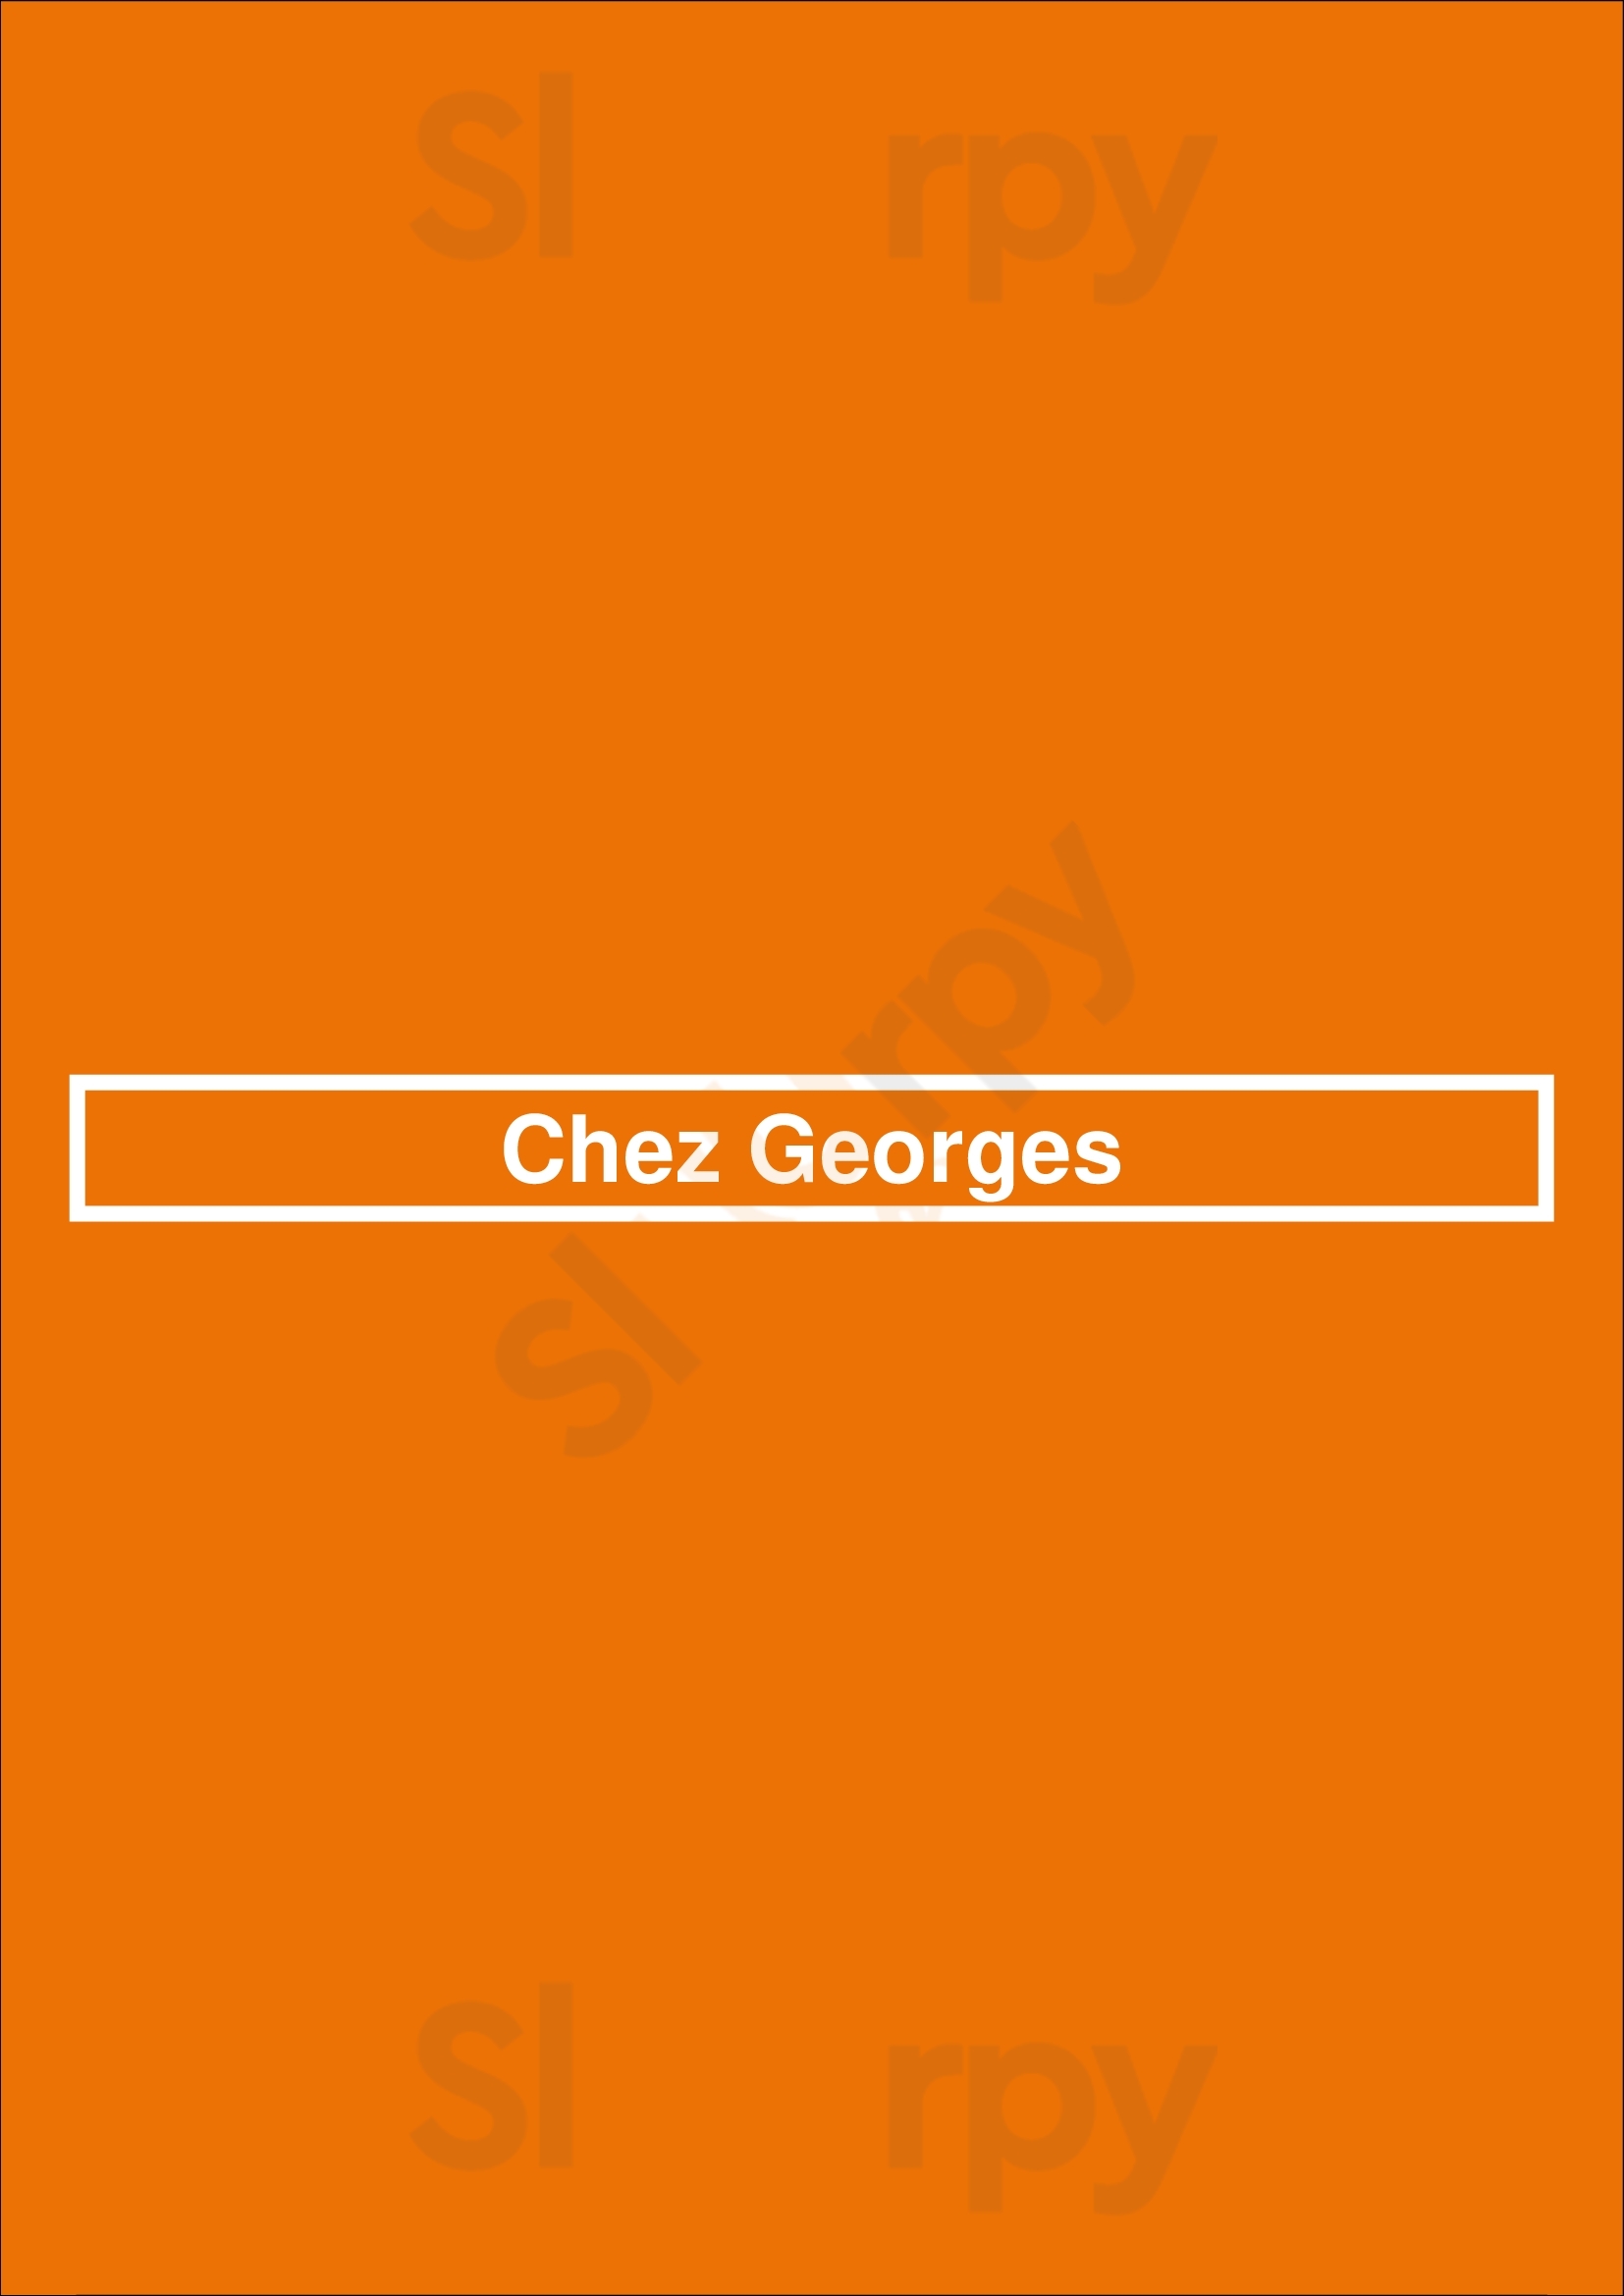 Chez Georges Amsterdam Menu - 1